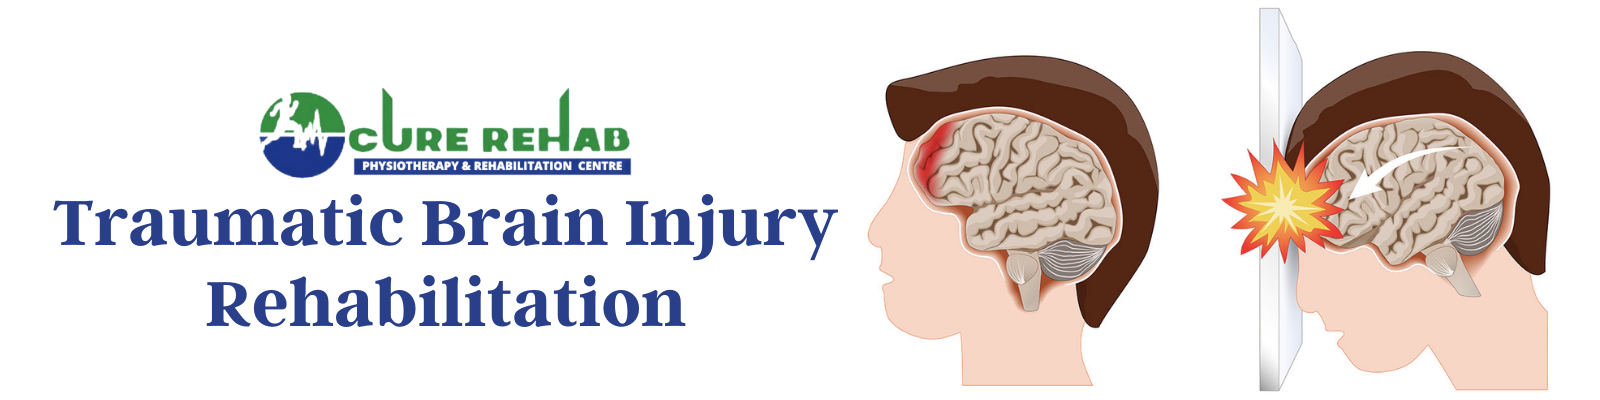 Traumatic Brain Injury Rehabilitation